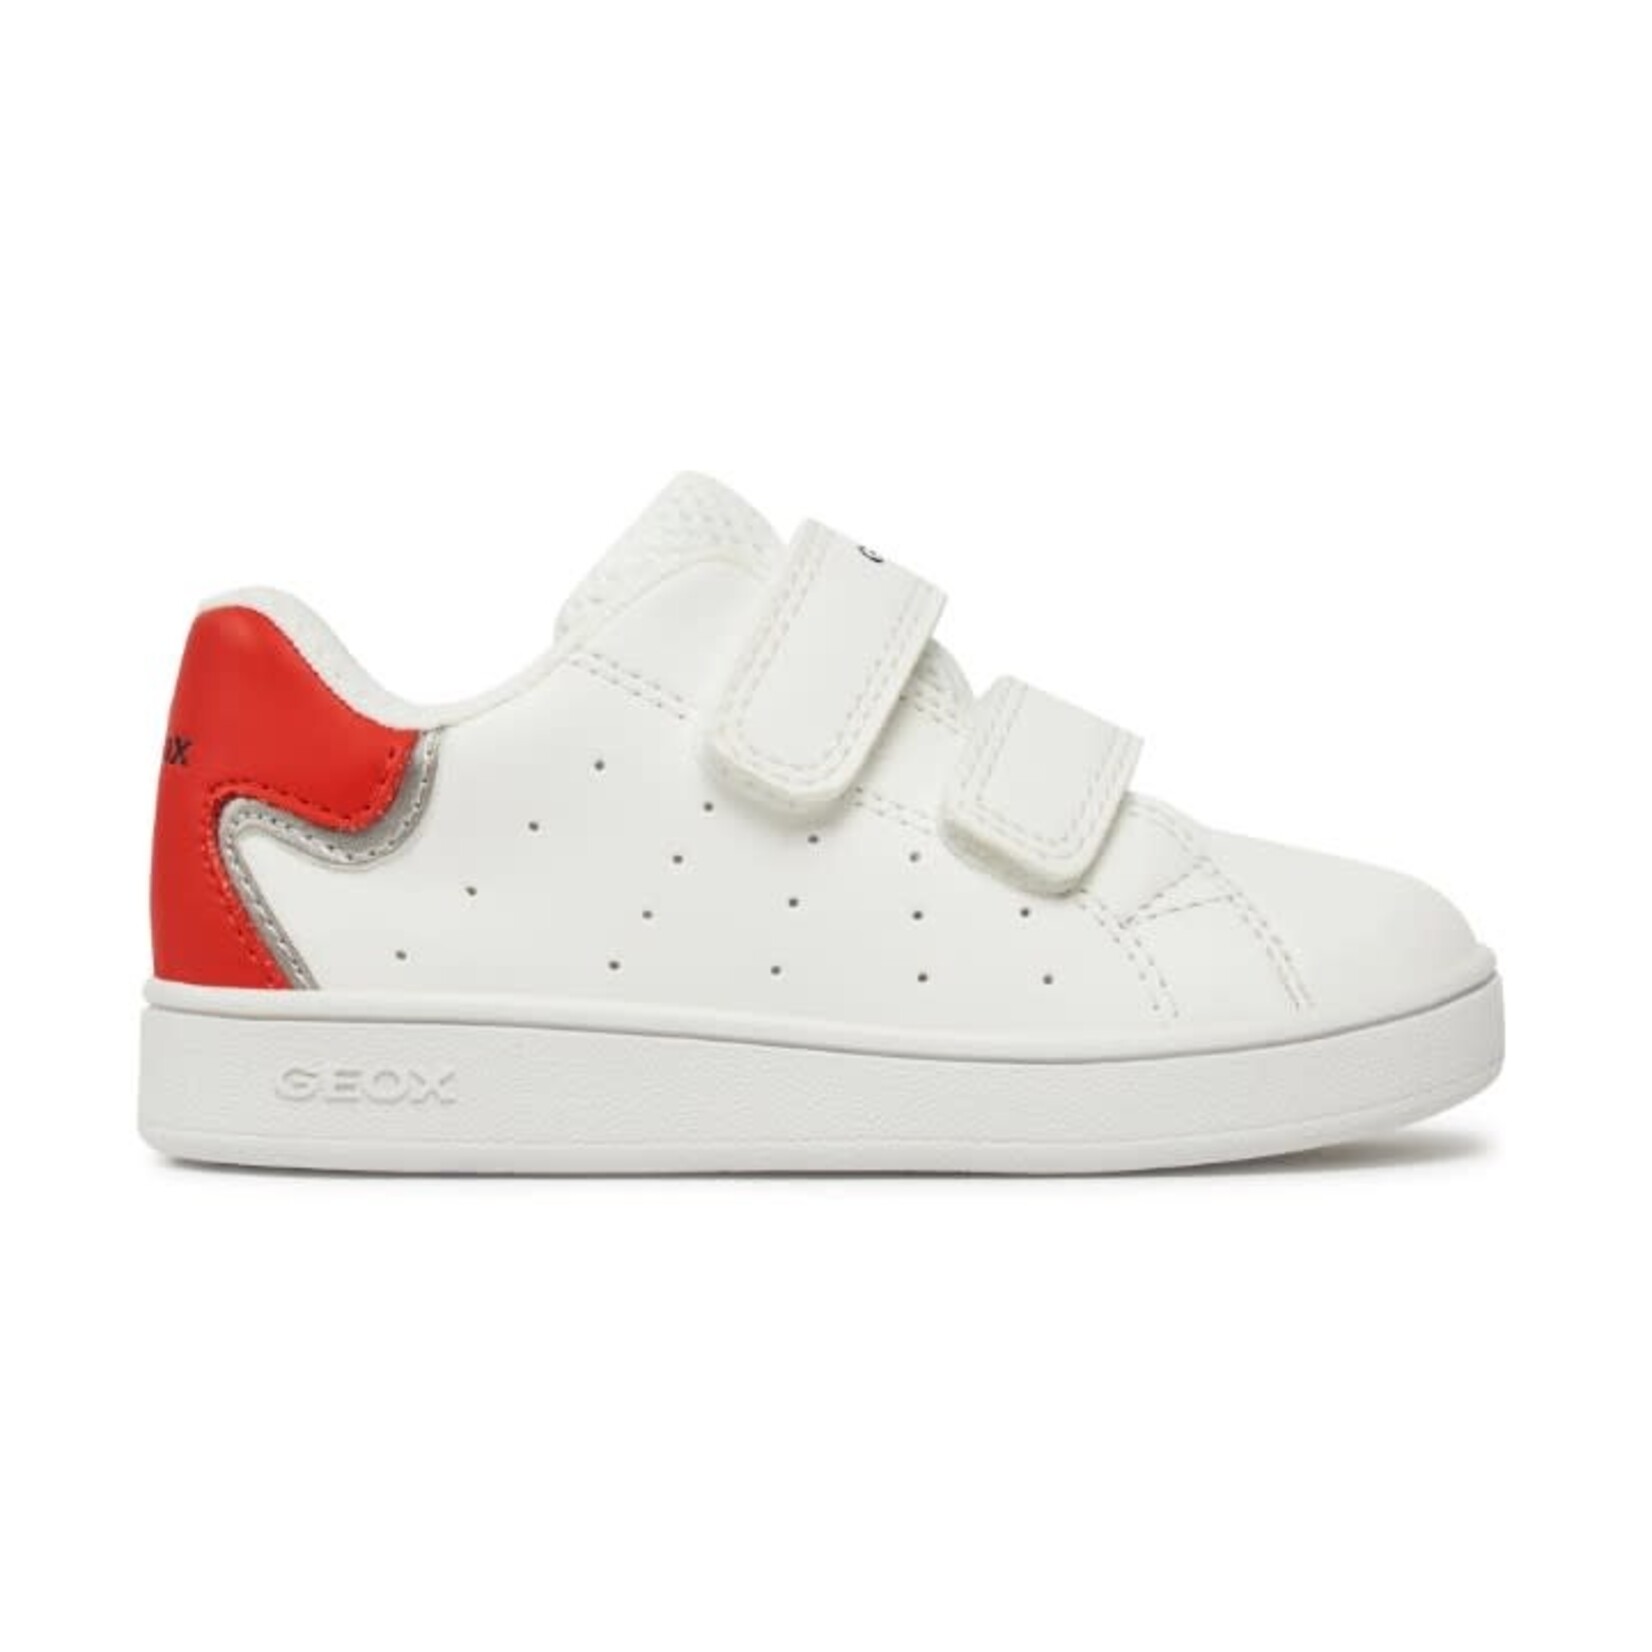 Geox GEOX - Chaussures blanche et rouge de cuir synthétique 'Eclyper - Blanc/rouge'